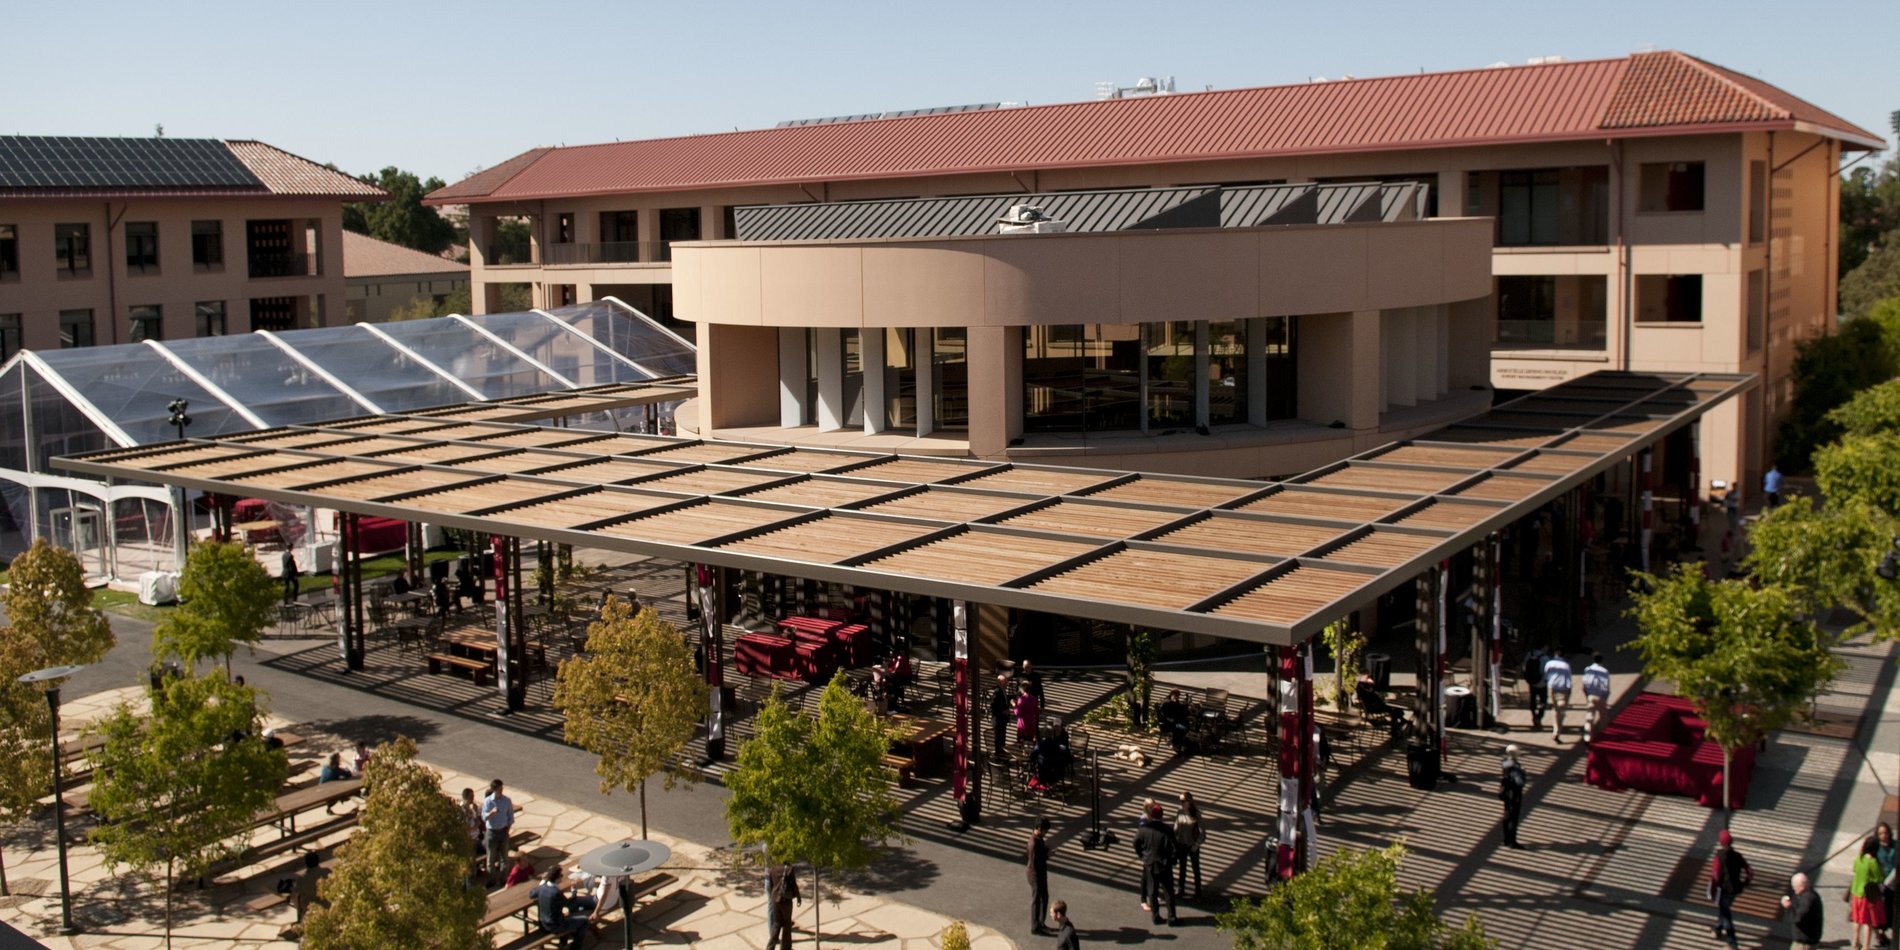 Knight Verwalten Centre, Stanford Graduate School of Business, opening day. Credit Linda A. Cicero / Stanford News Serve